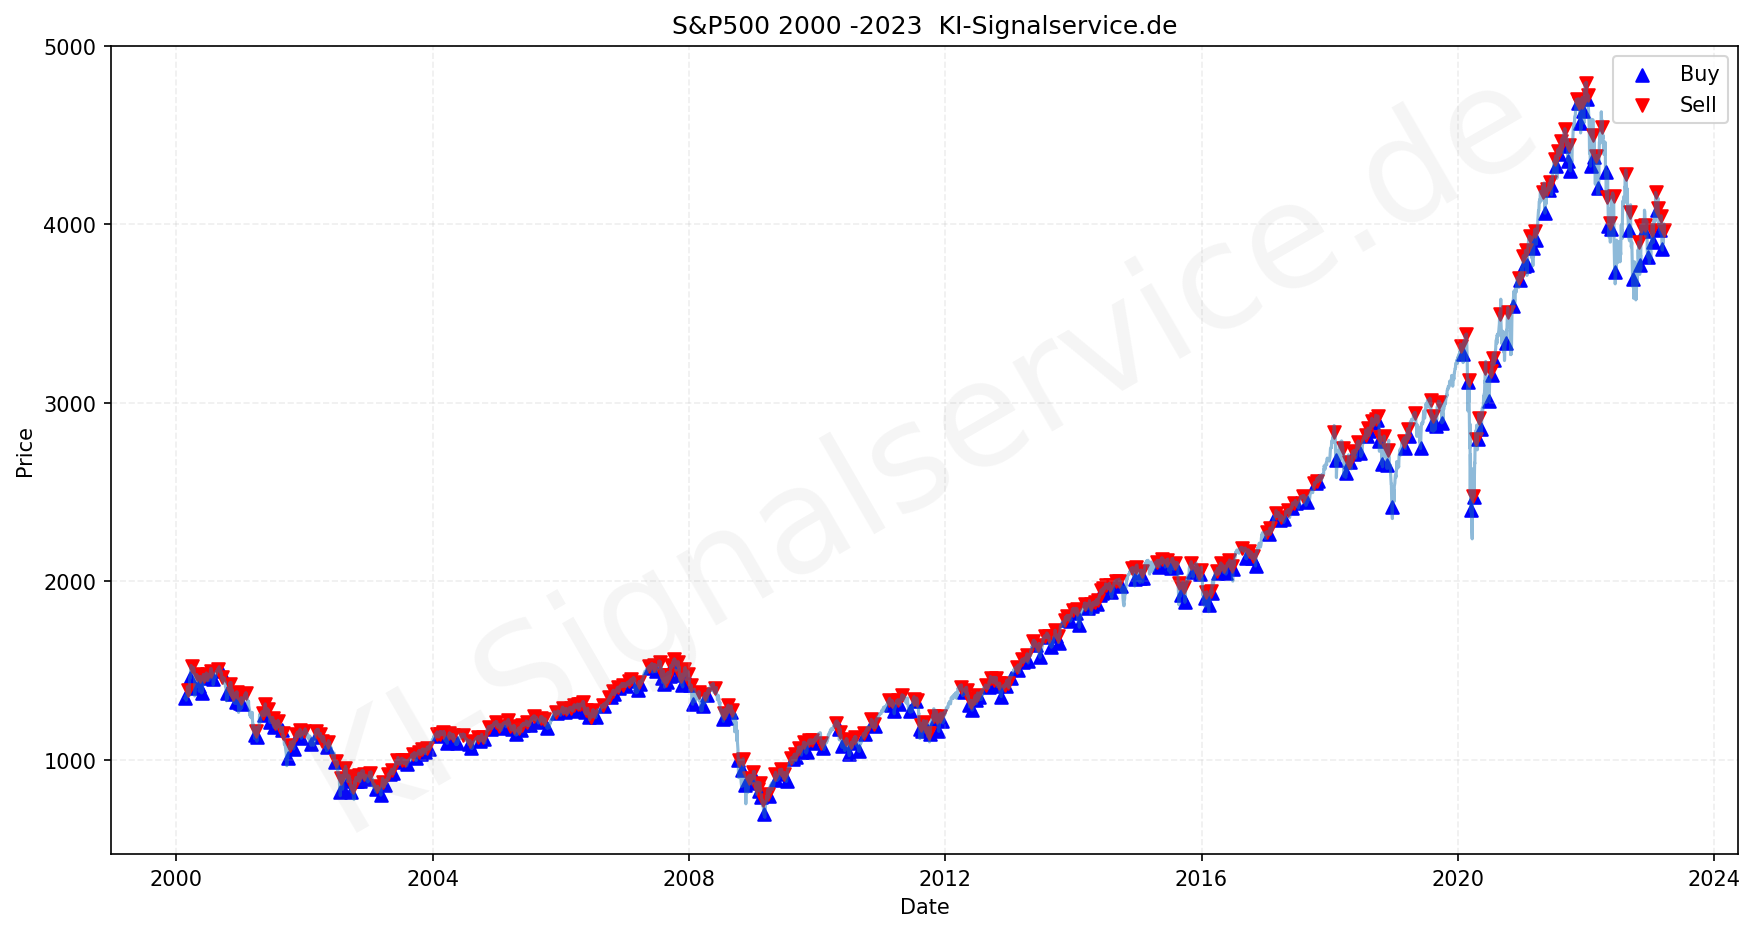 SP500 Index Performance Chart - KI Tradingsignale 2000-2022